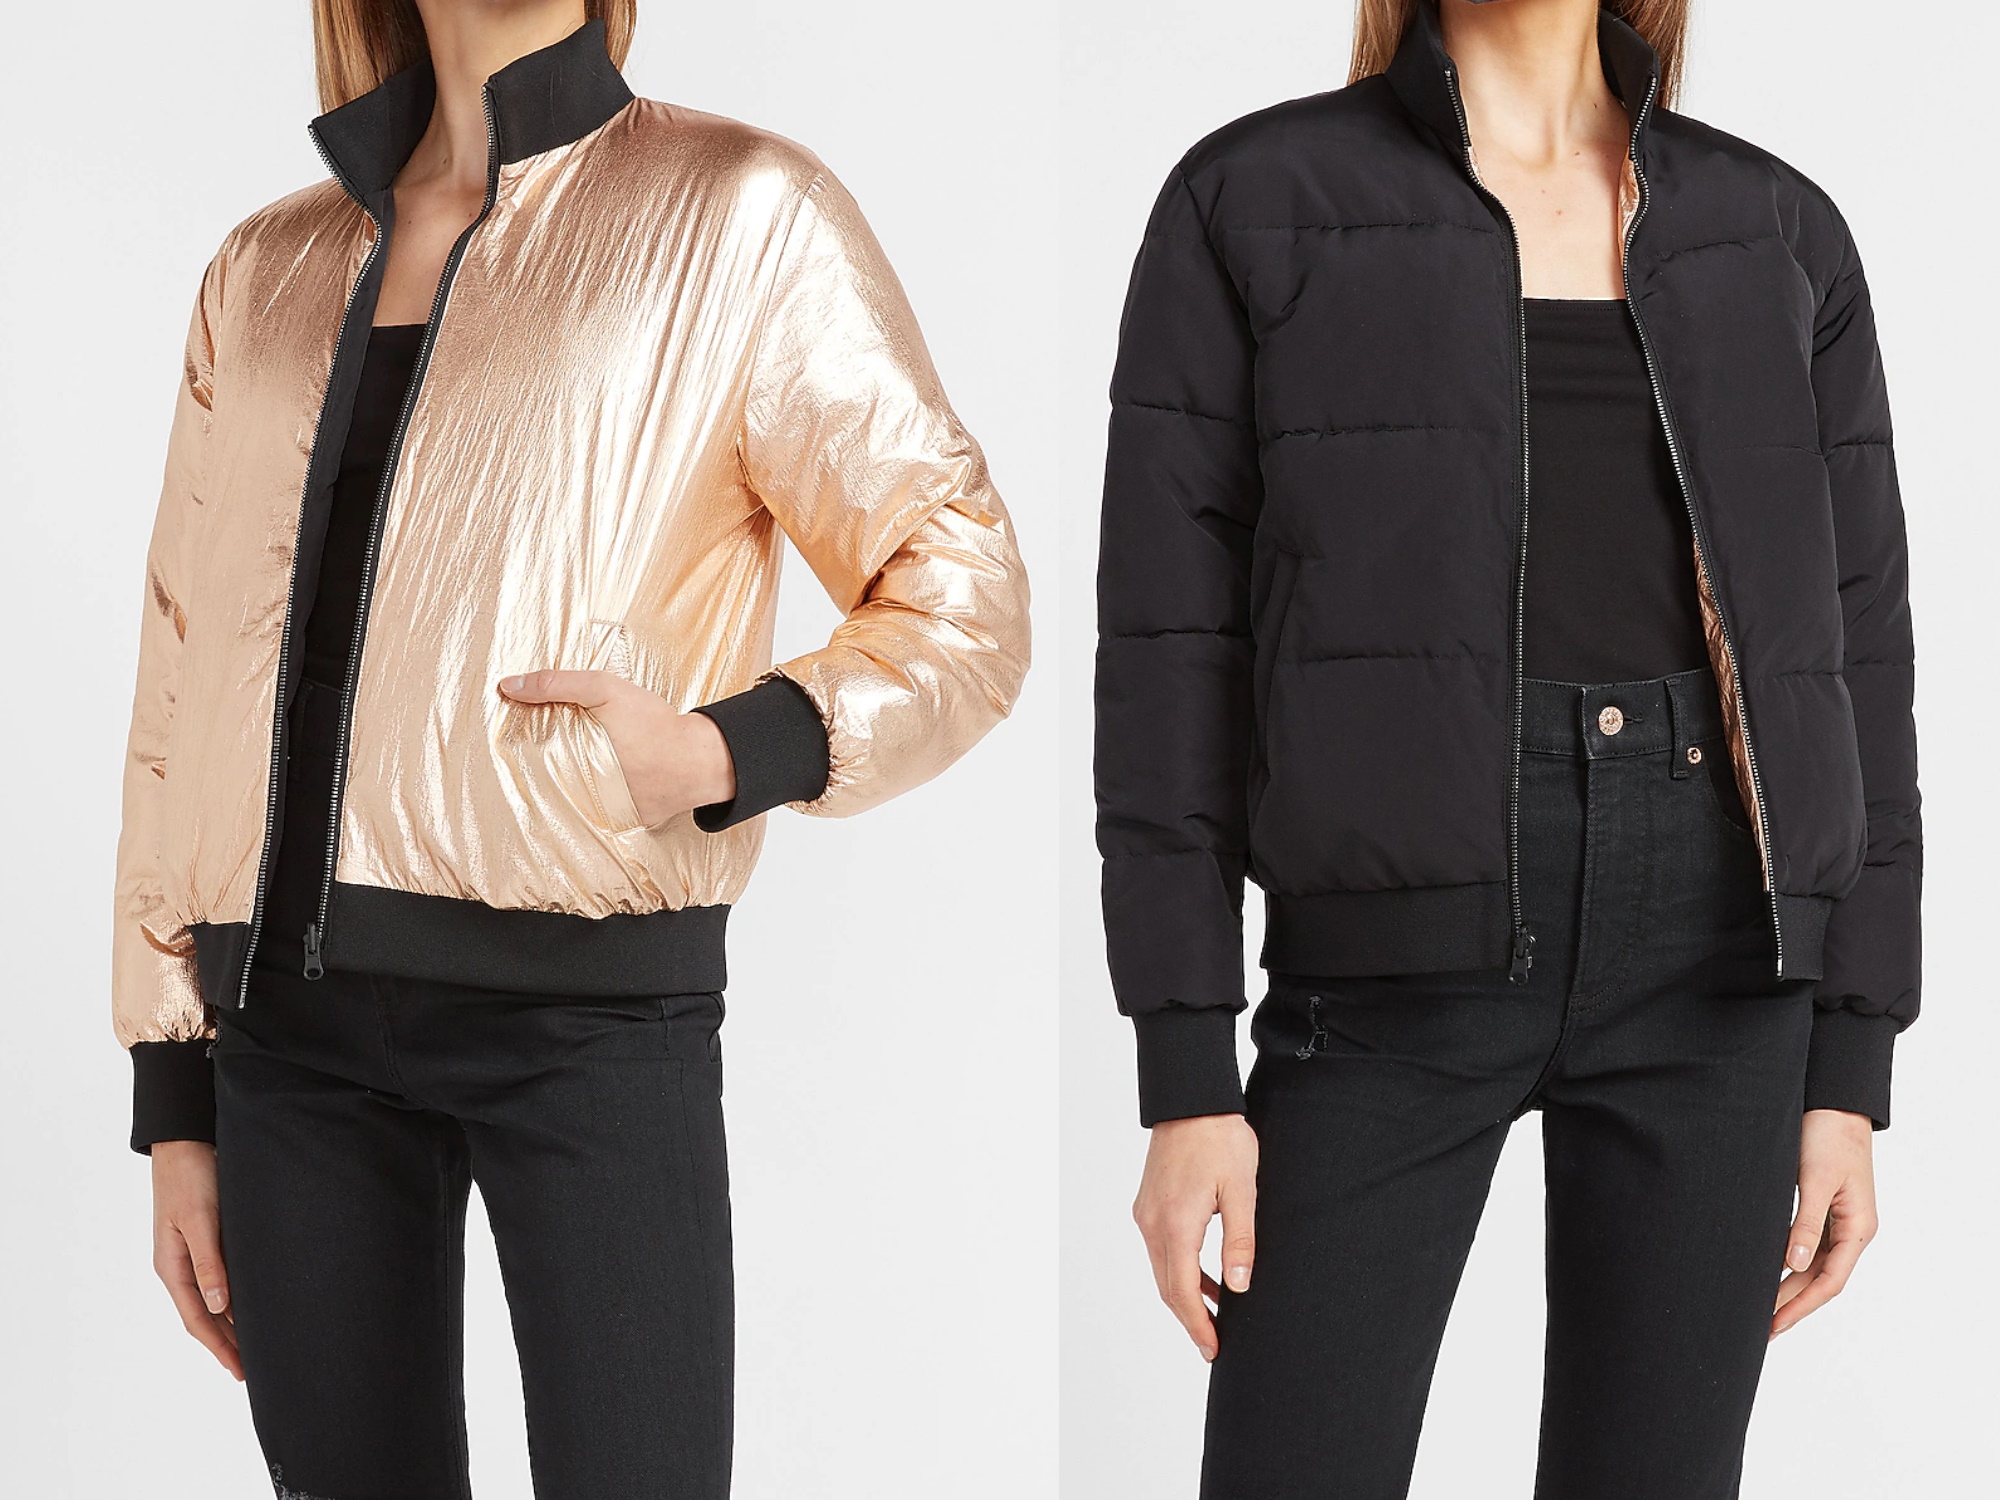 Women's Bomber Jacket Leather Jacket Fleece Warm Jacket Lightweight Zip Up Casual Inspired Bomber Jacket 